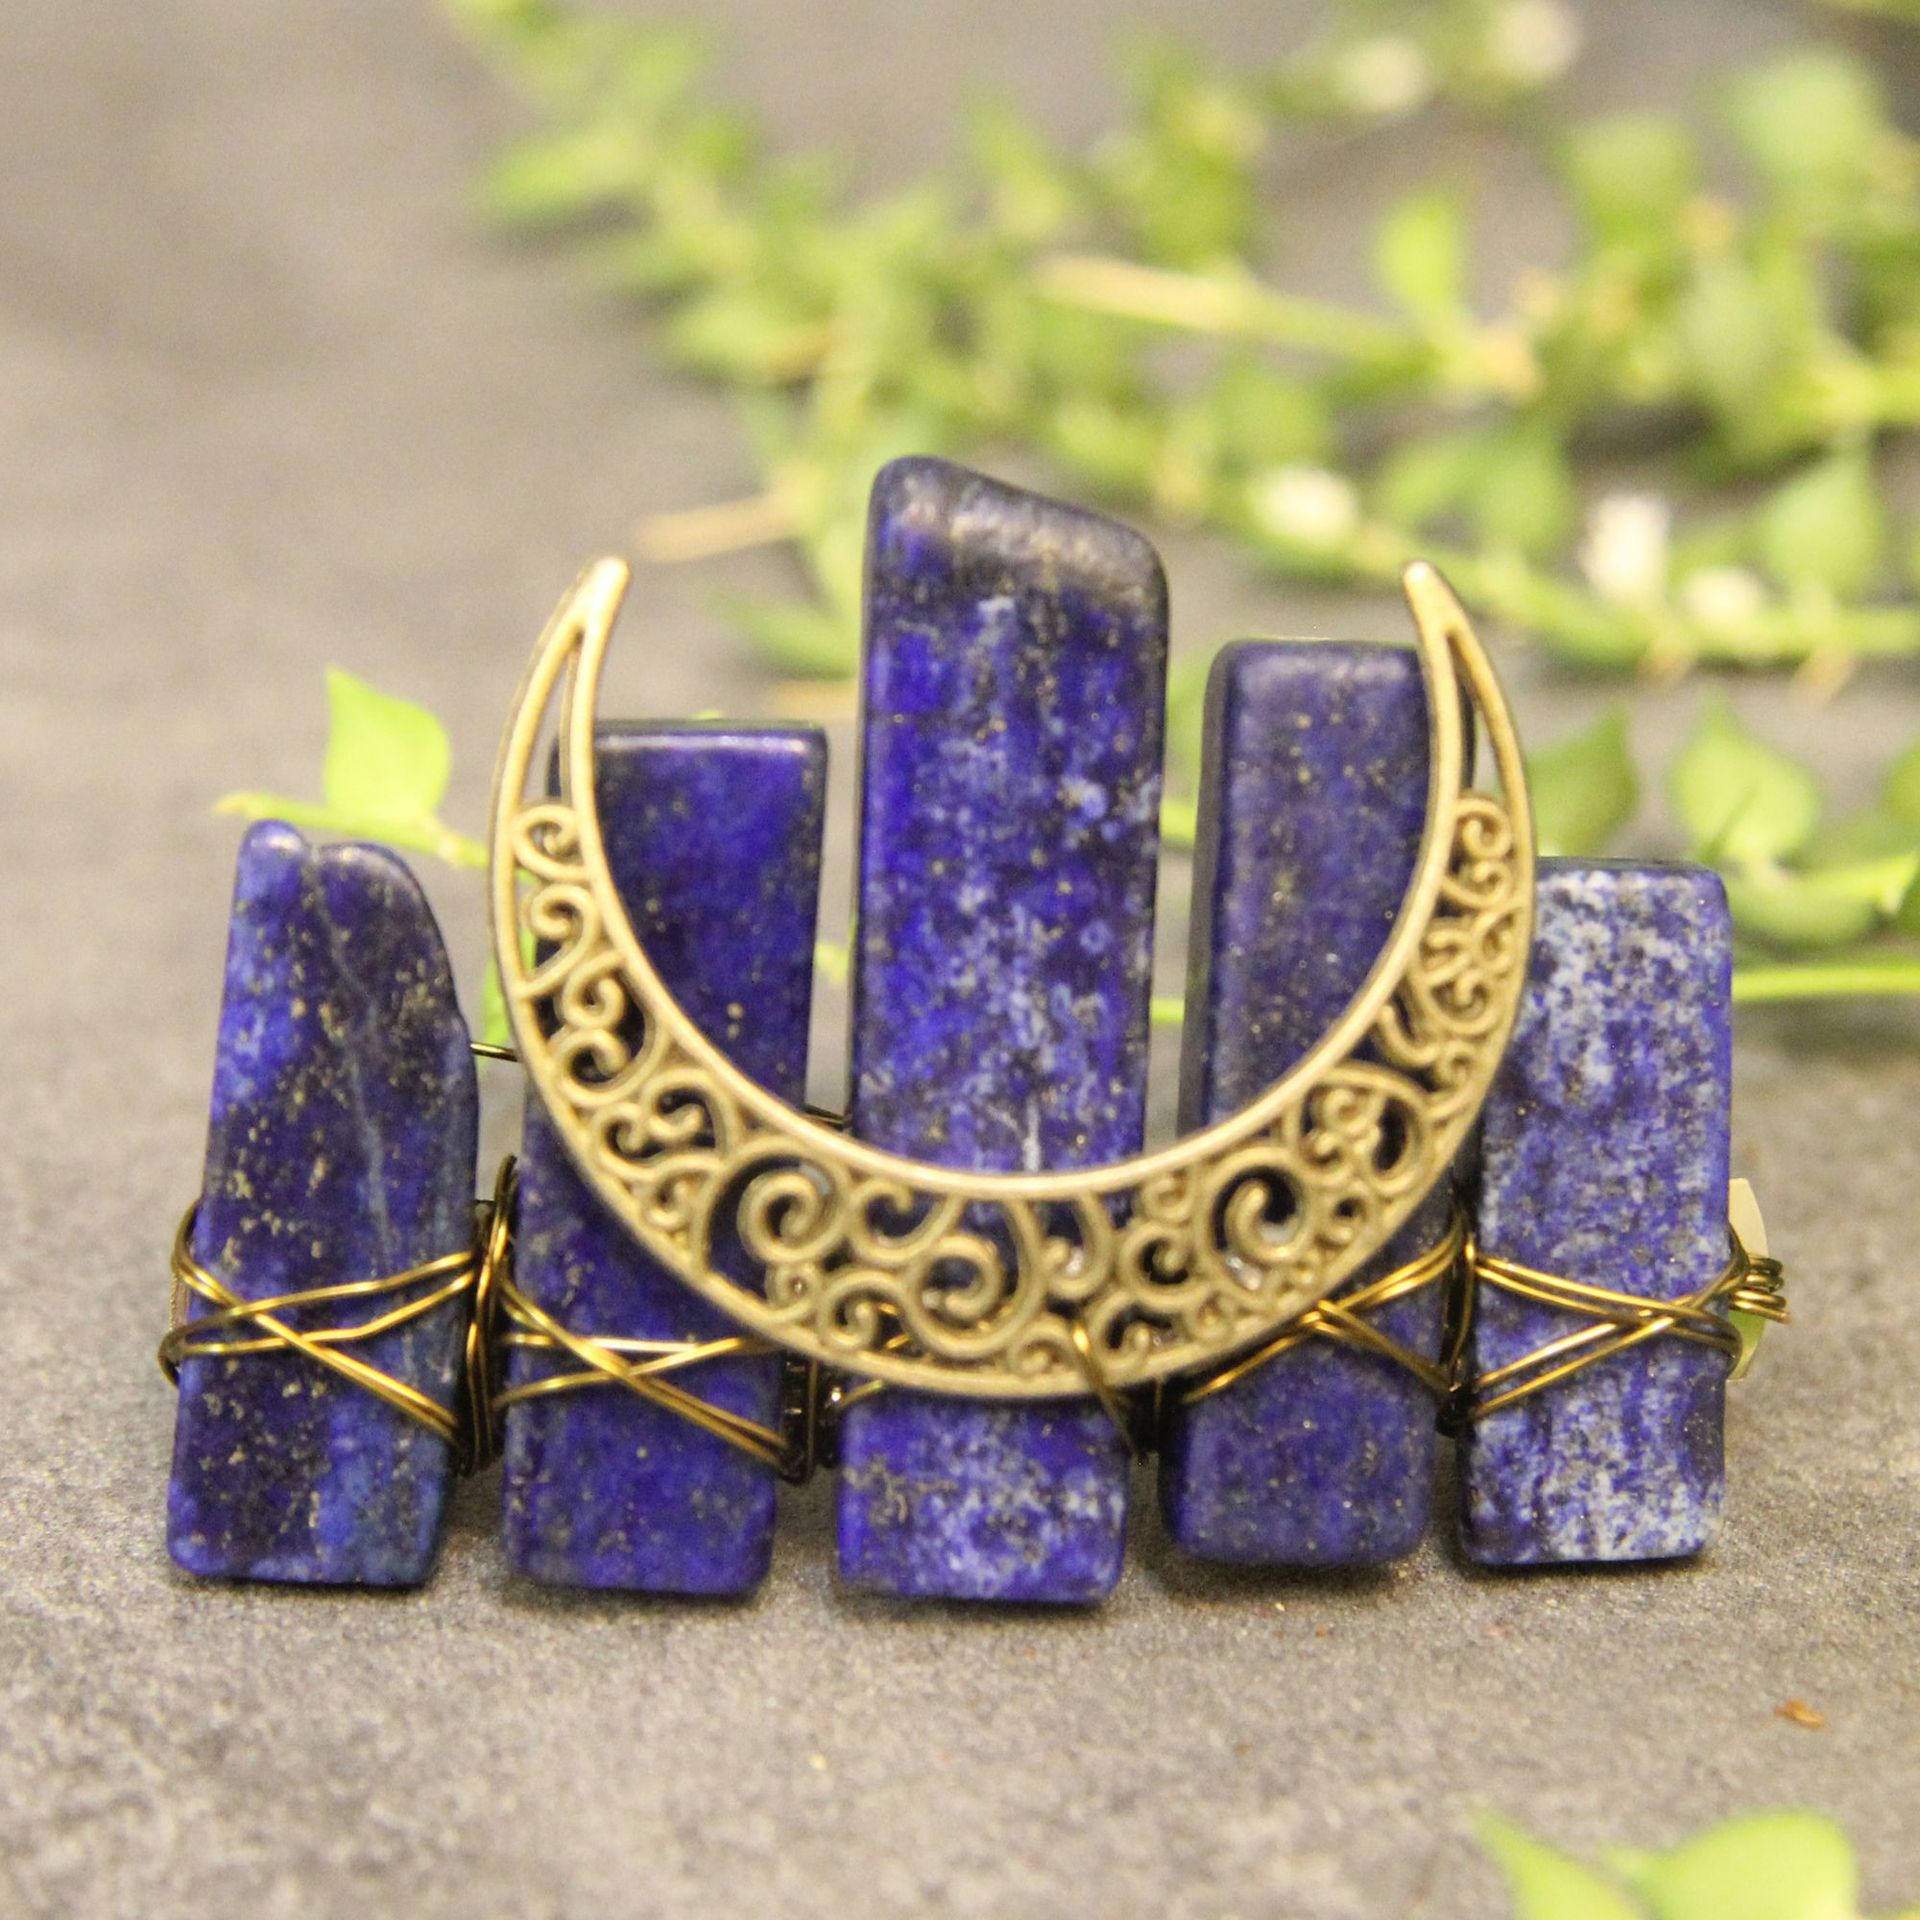 7:Lapis Lazuli